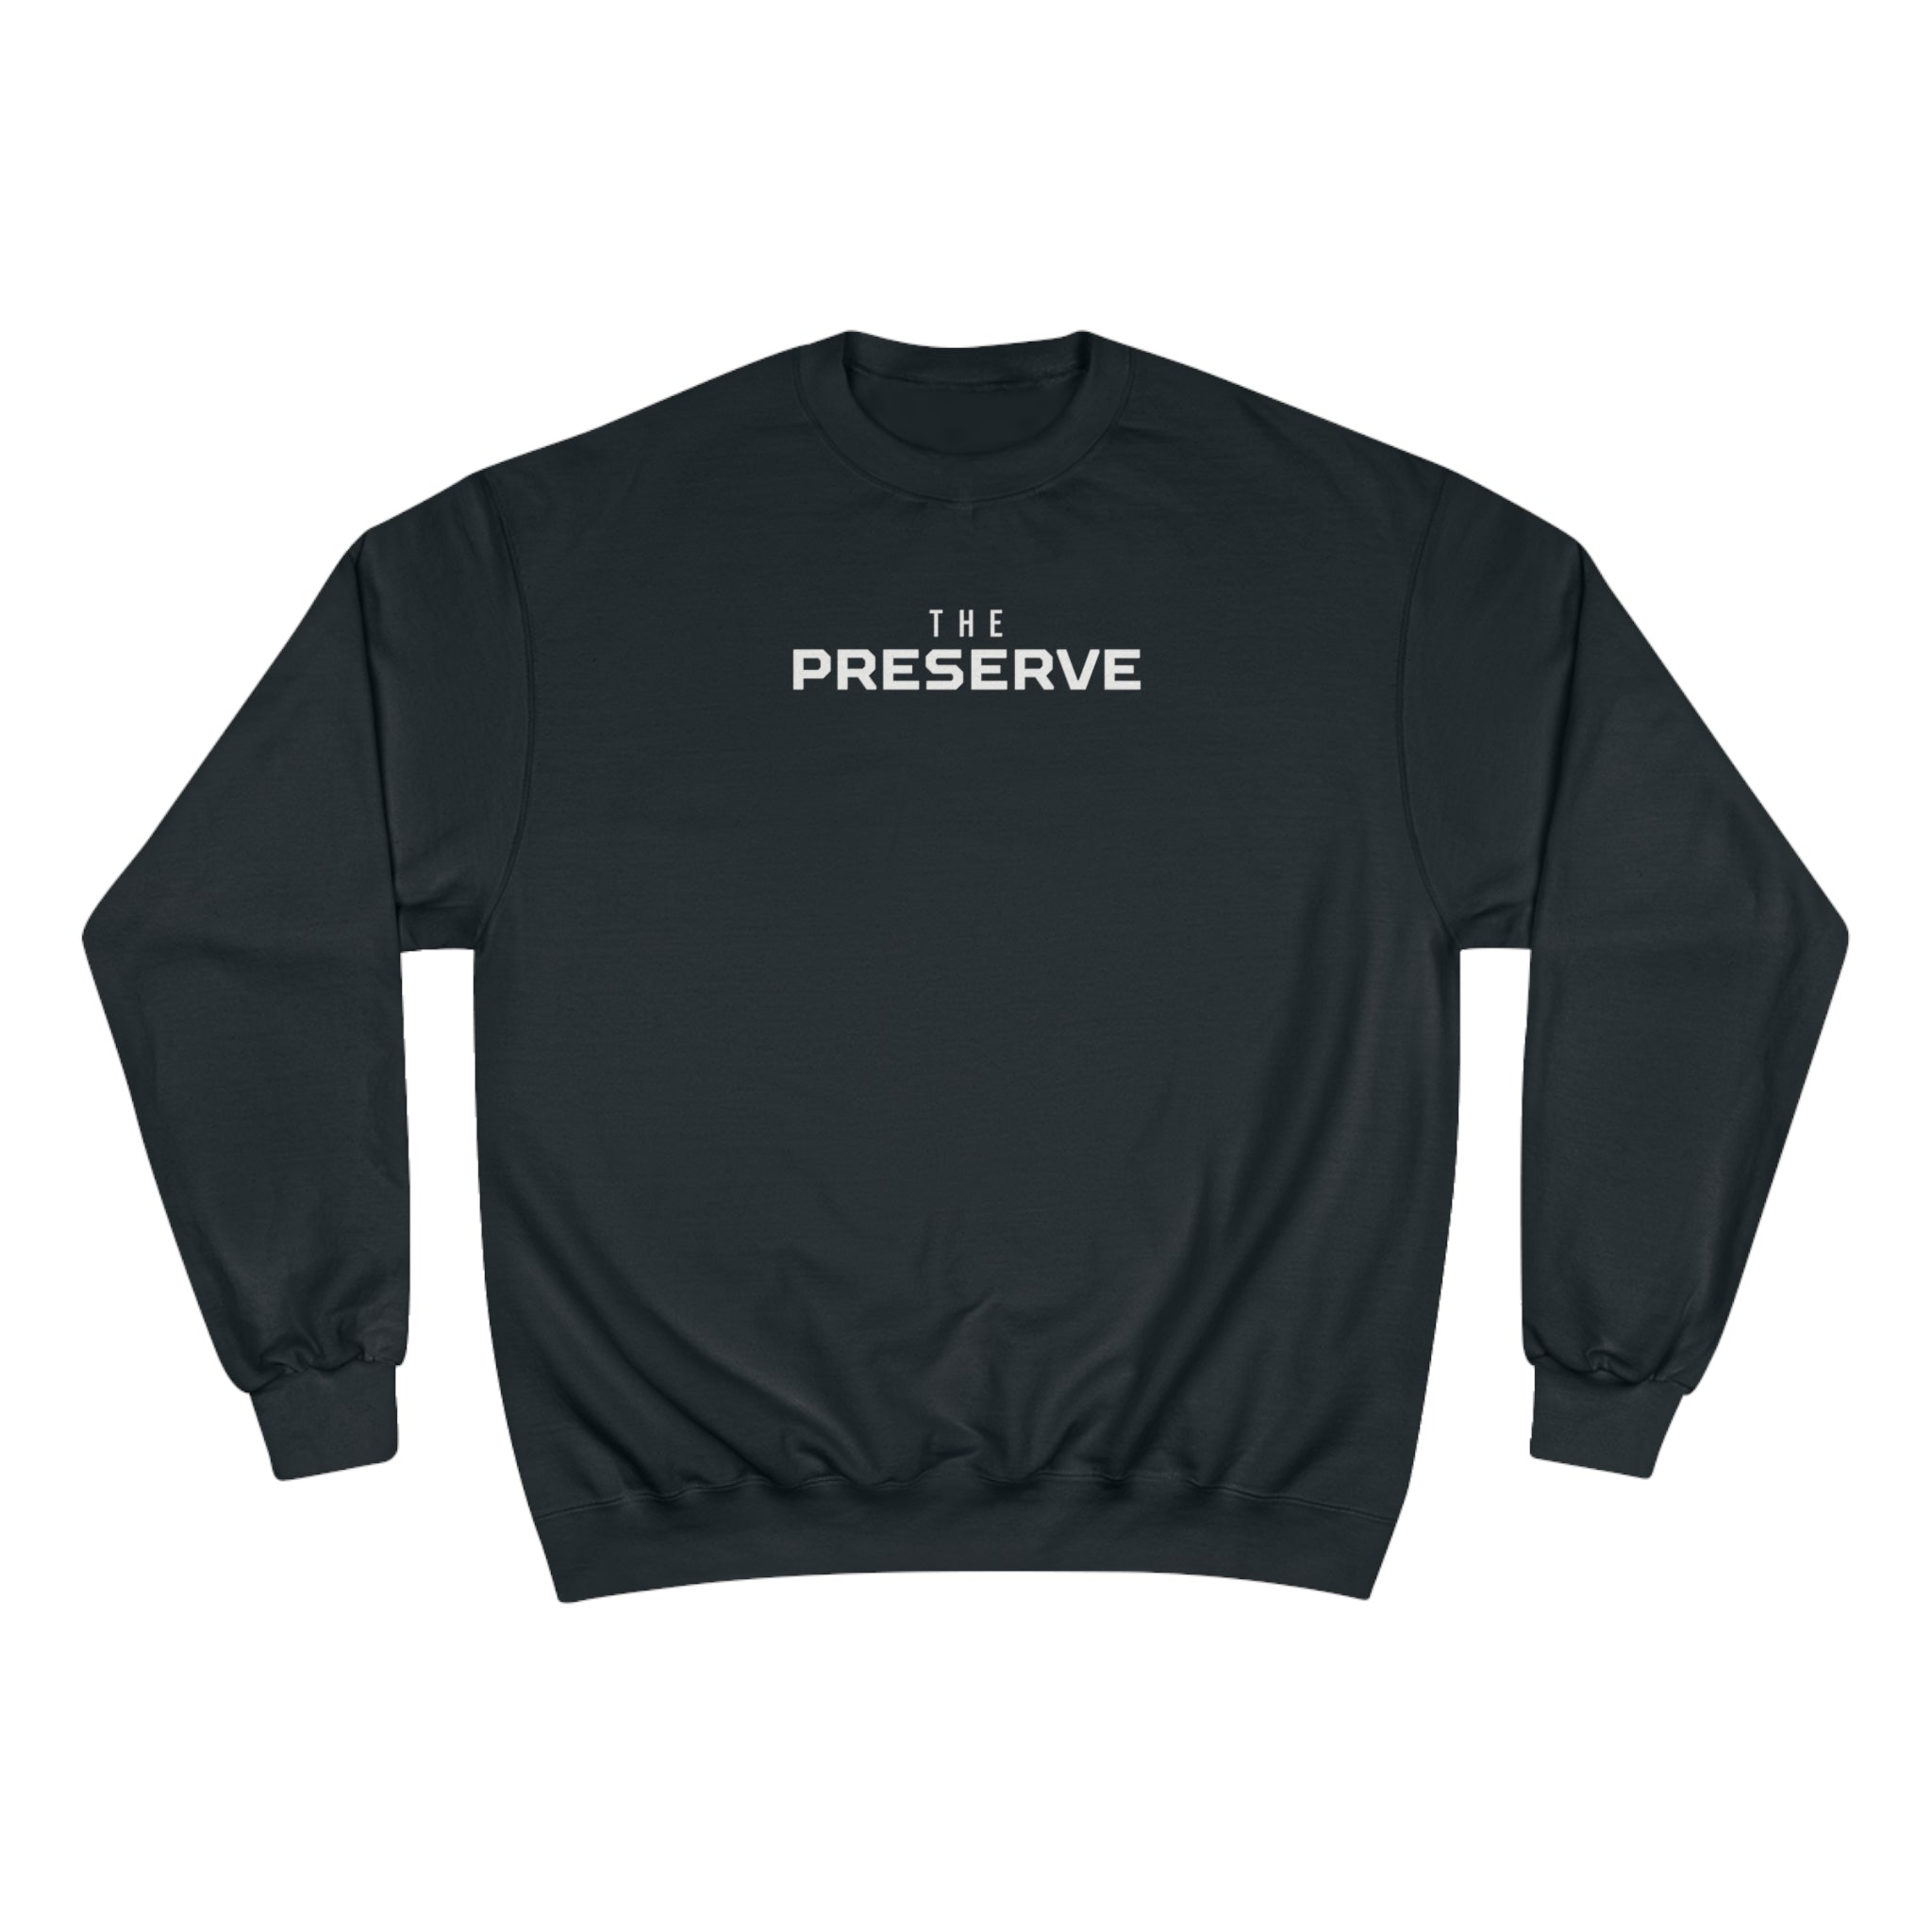 The Preserve Fundraiser Shield Champion Sweatshirt